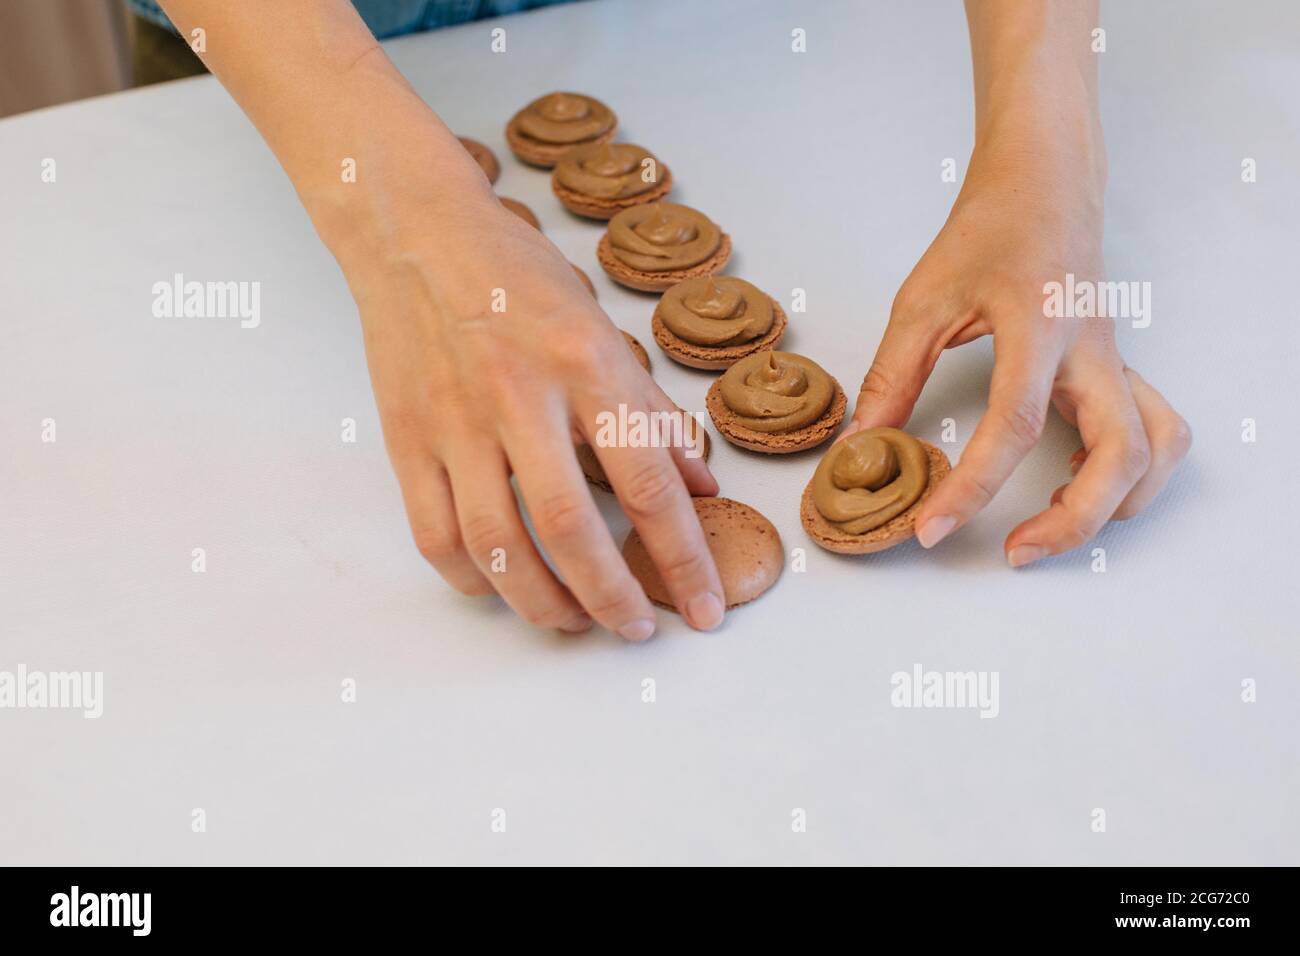 Woman making chocolate macaroons Stock Photo